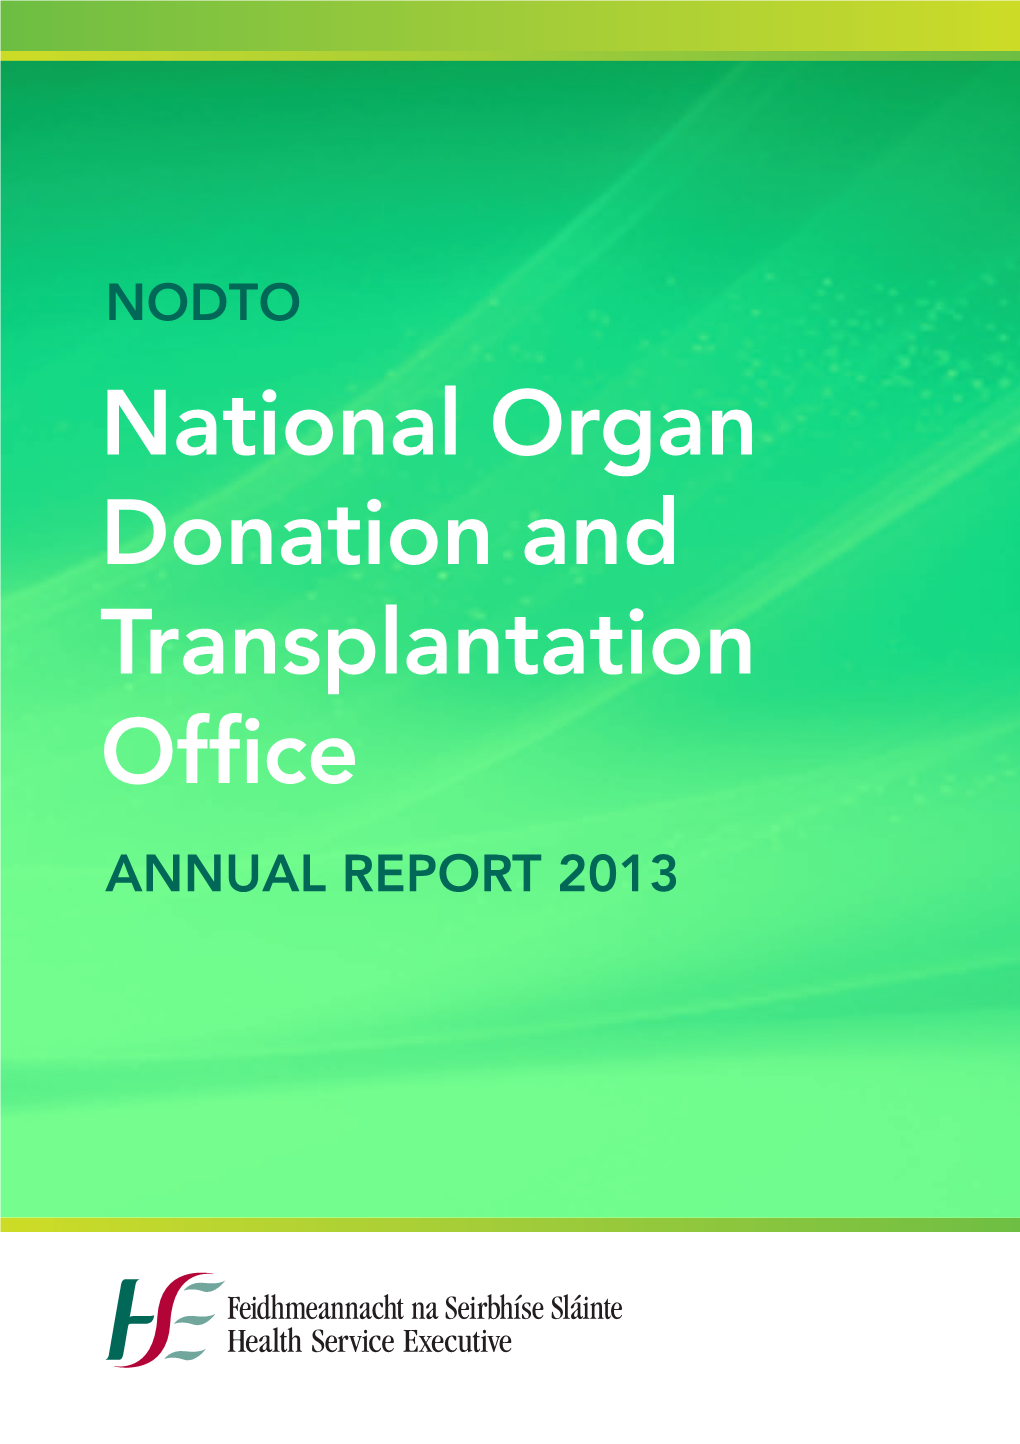 NODTO National Organ Donation and Transplantation Office ANNUAL REPORT 2013